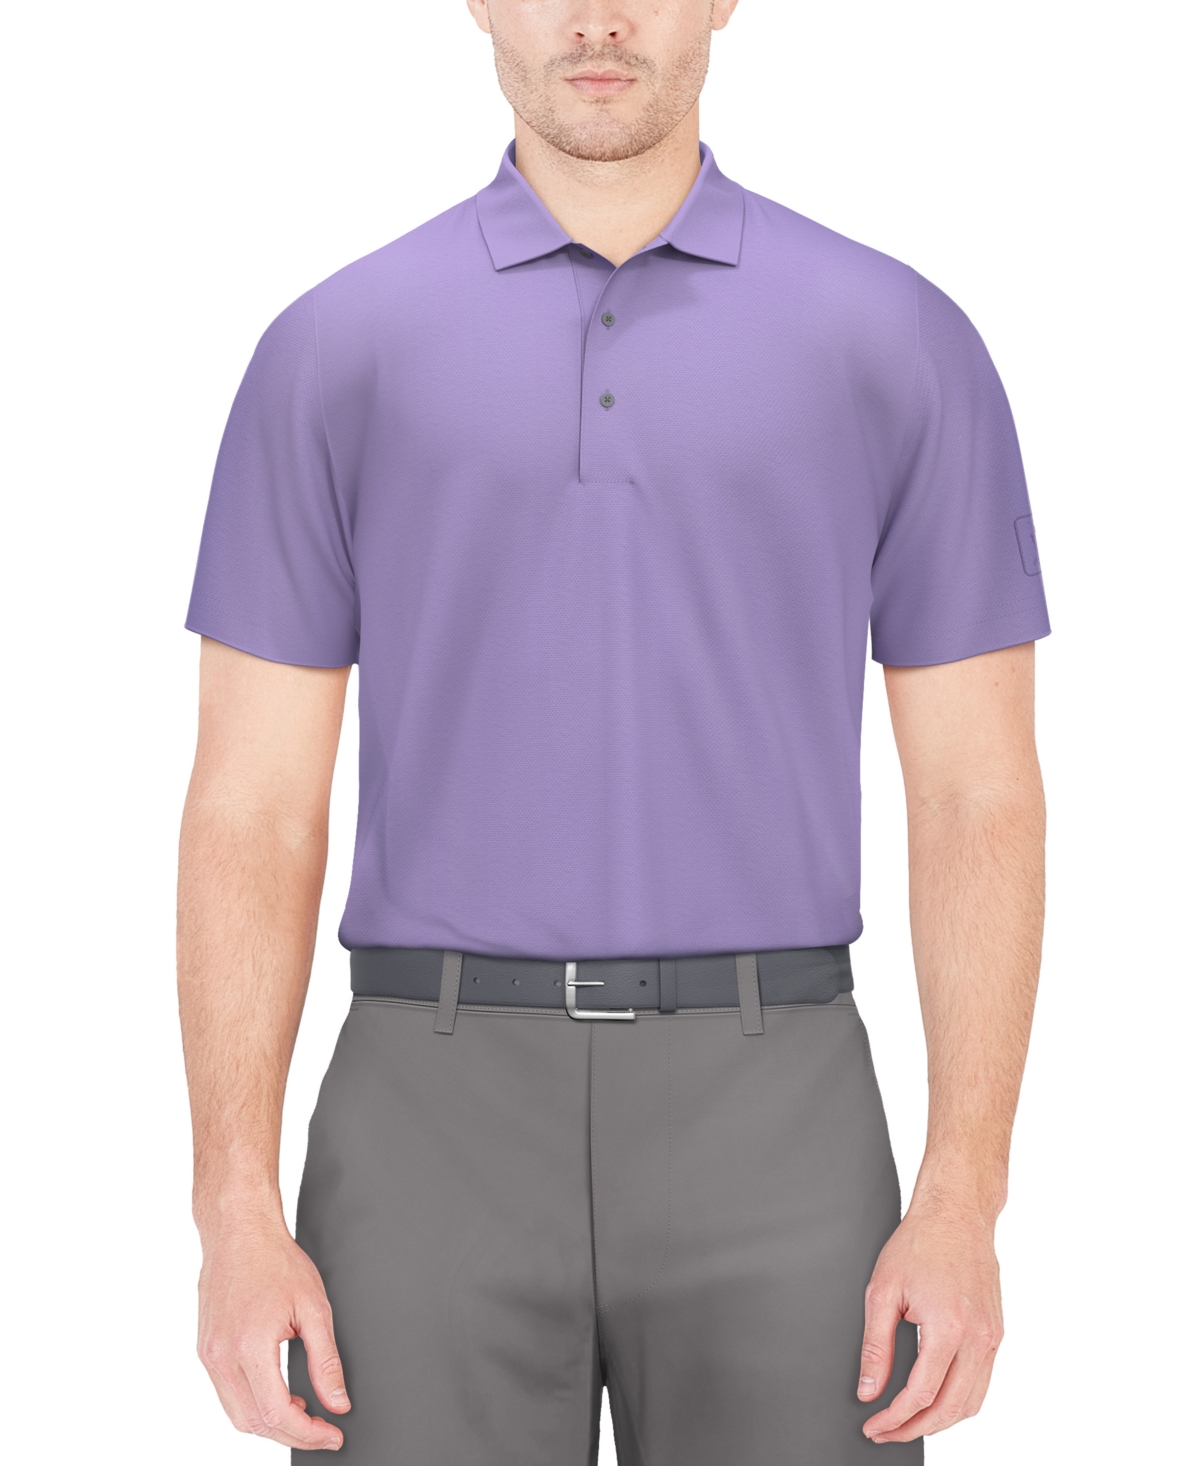 Men's Airflux Mesh Golf Polo Shirt - Shell Pink